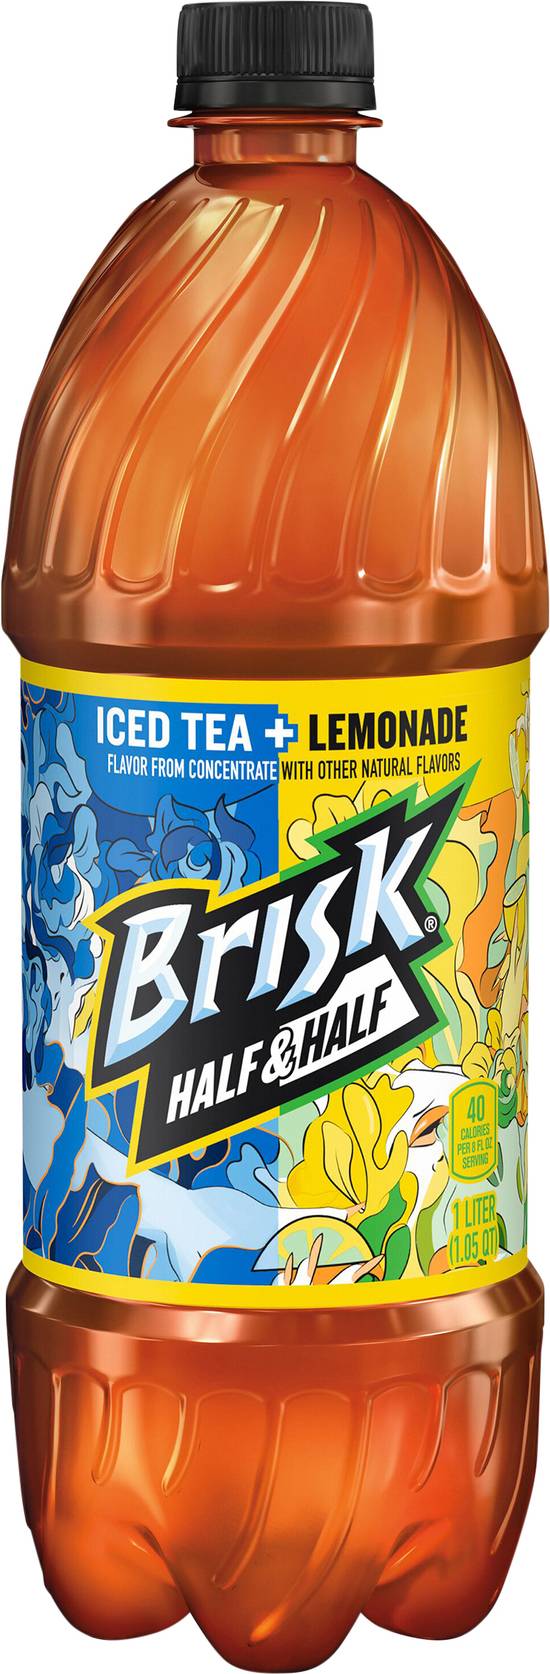 Brisk Half & Half Iced Tea + Lemonade (1 L)